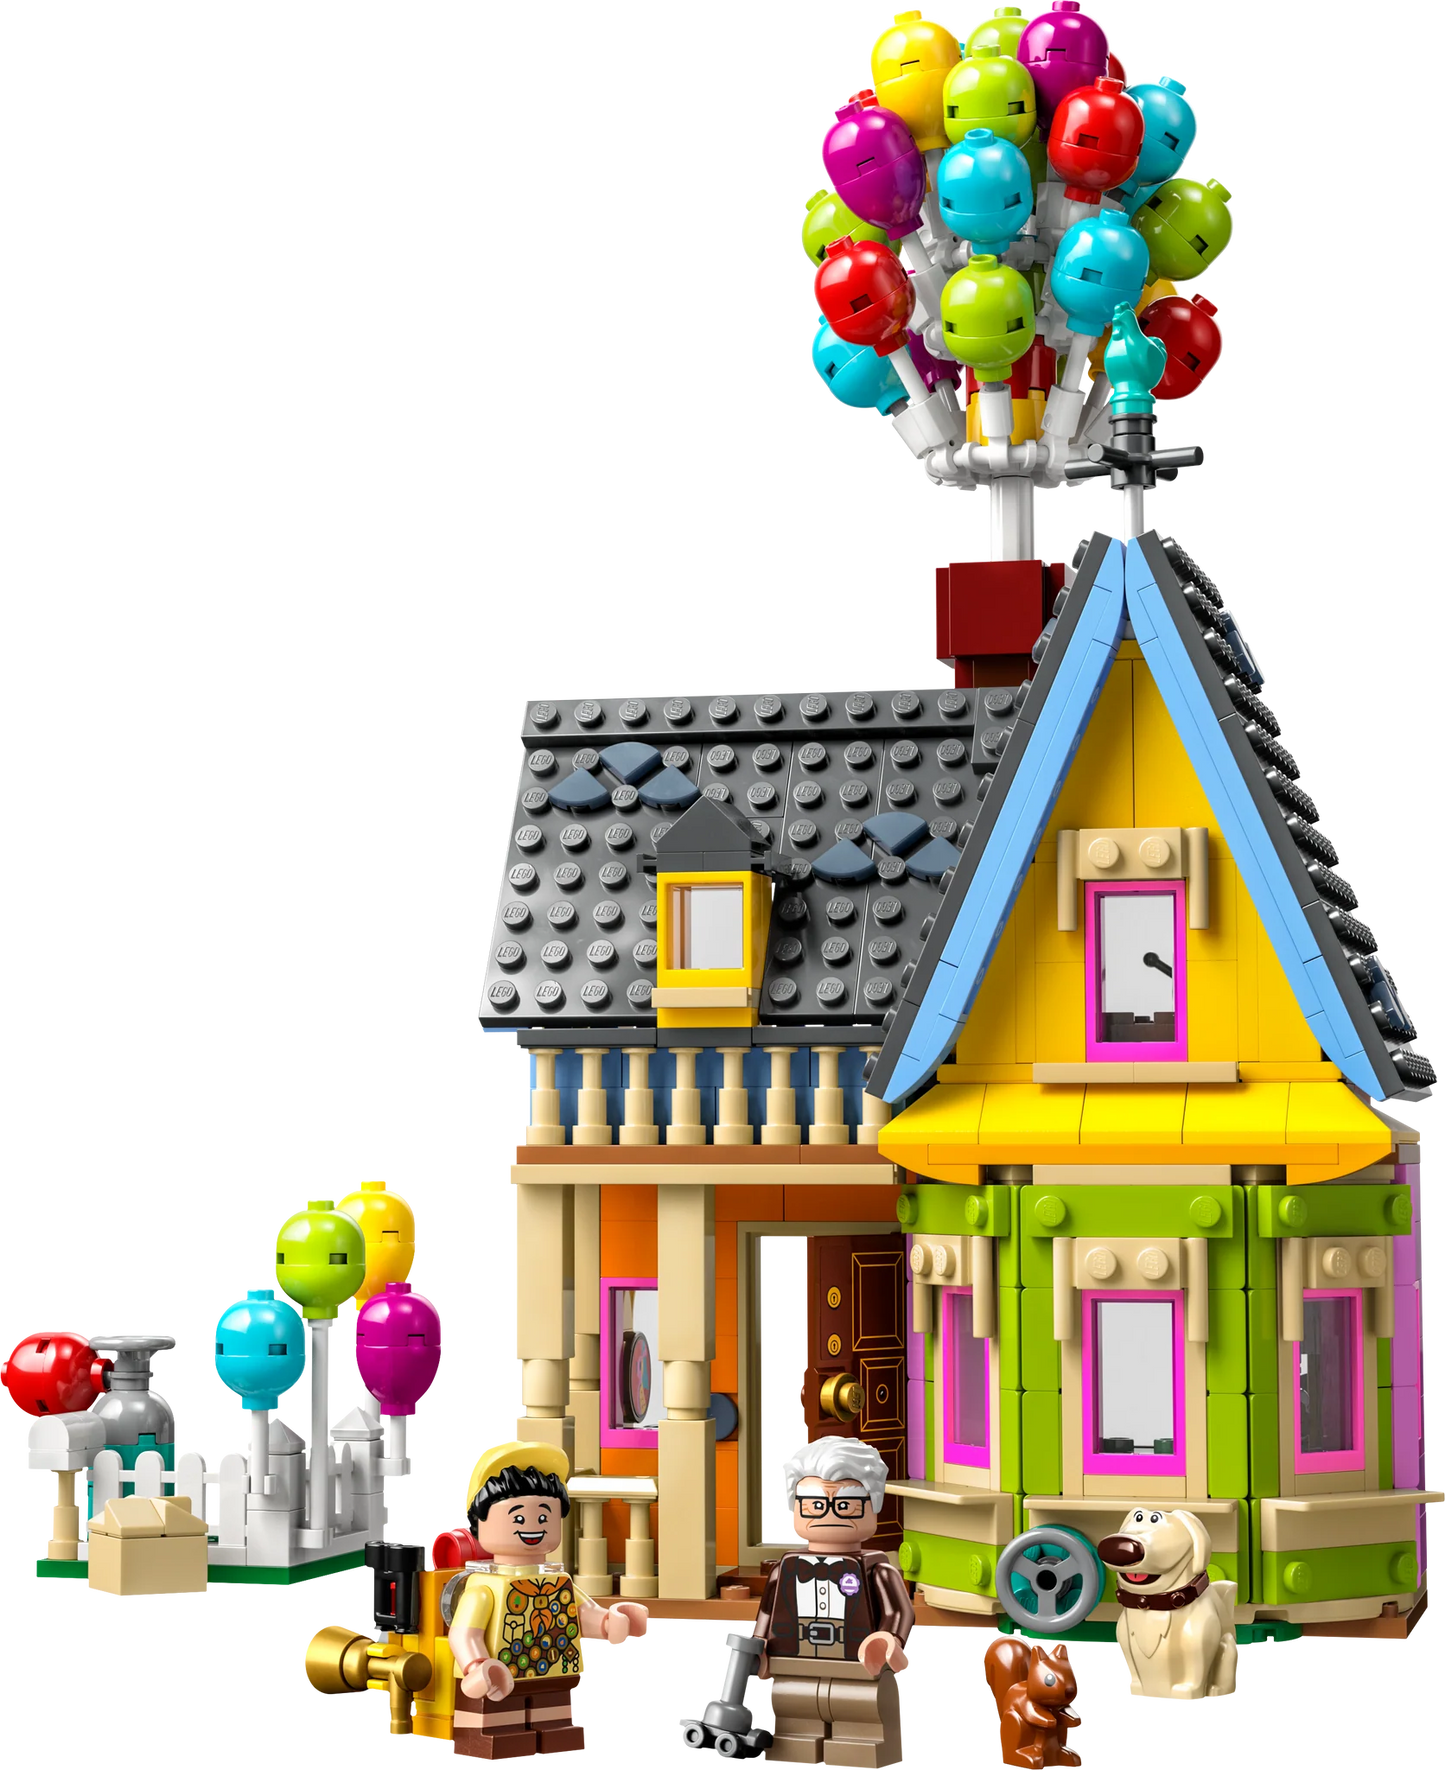 LEGO® ǀ Disney and Pixar ‘Up’ House 43217 Building Toy Set (598 Pieces)